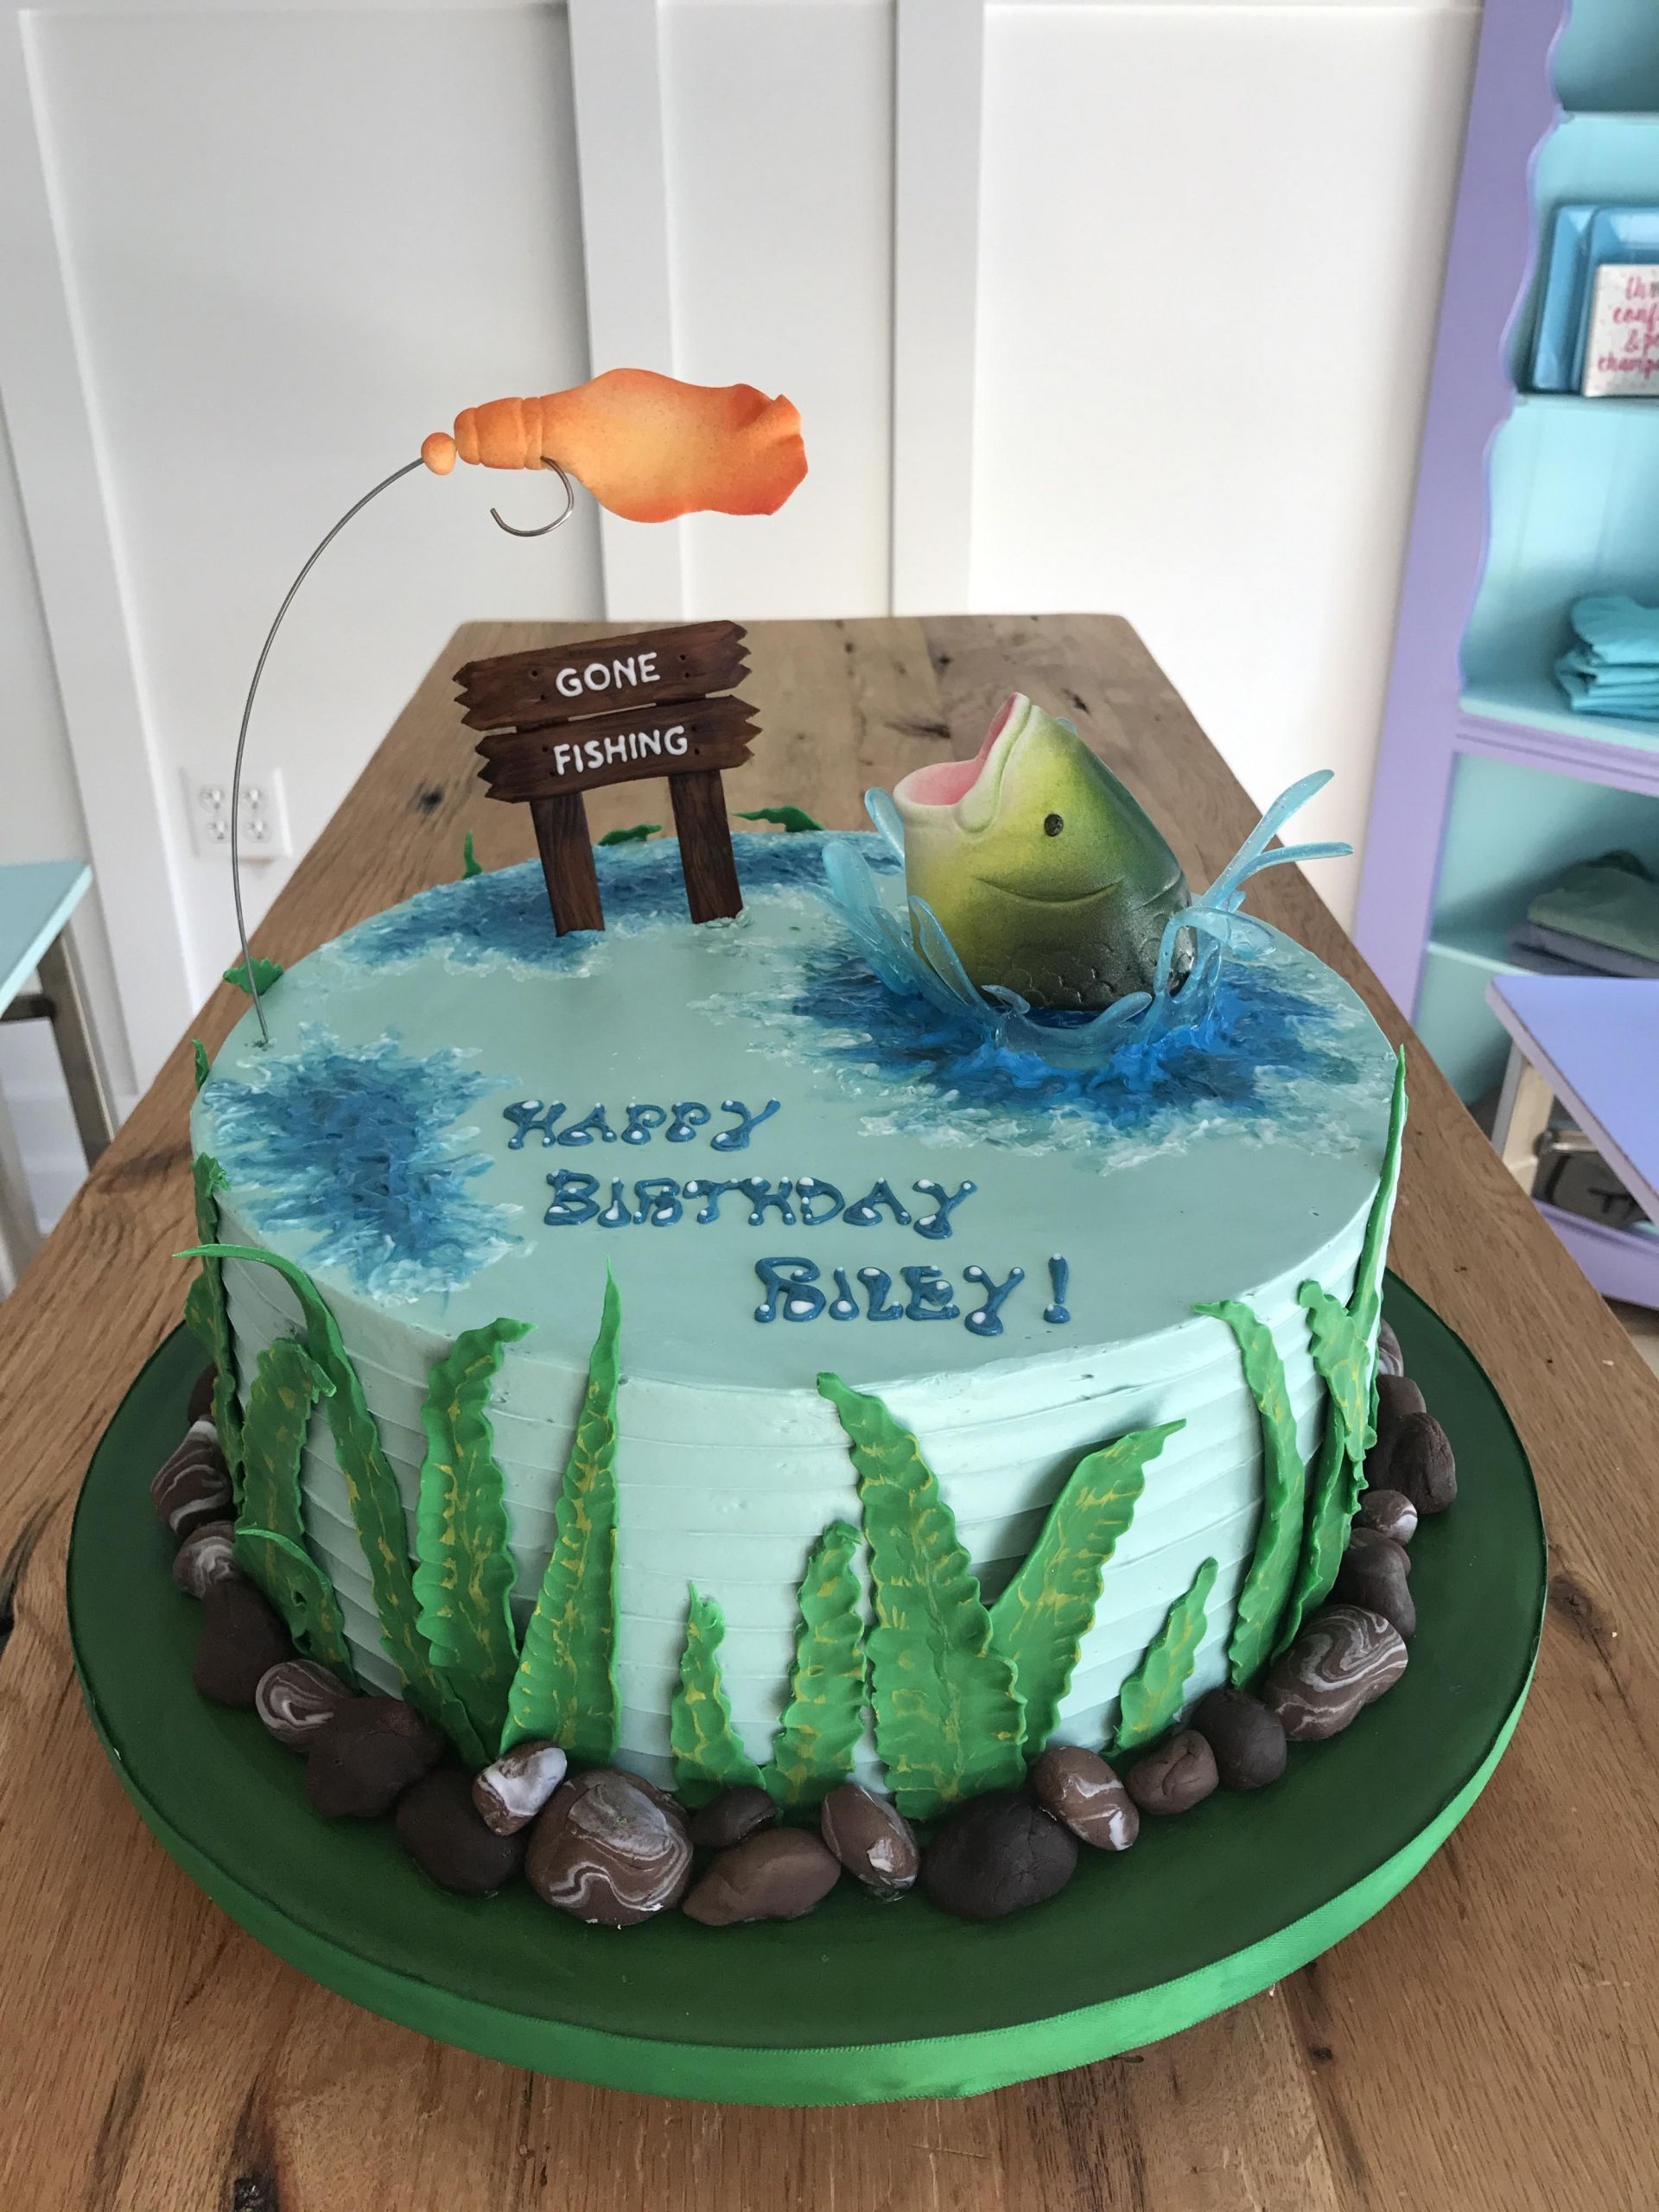 Fishing Birthday Cake Ideas
 "Gone Fishing" birthday cake